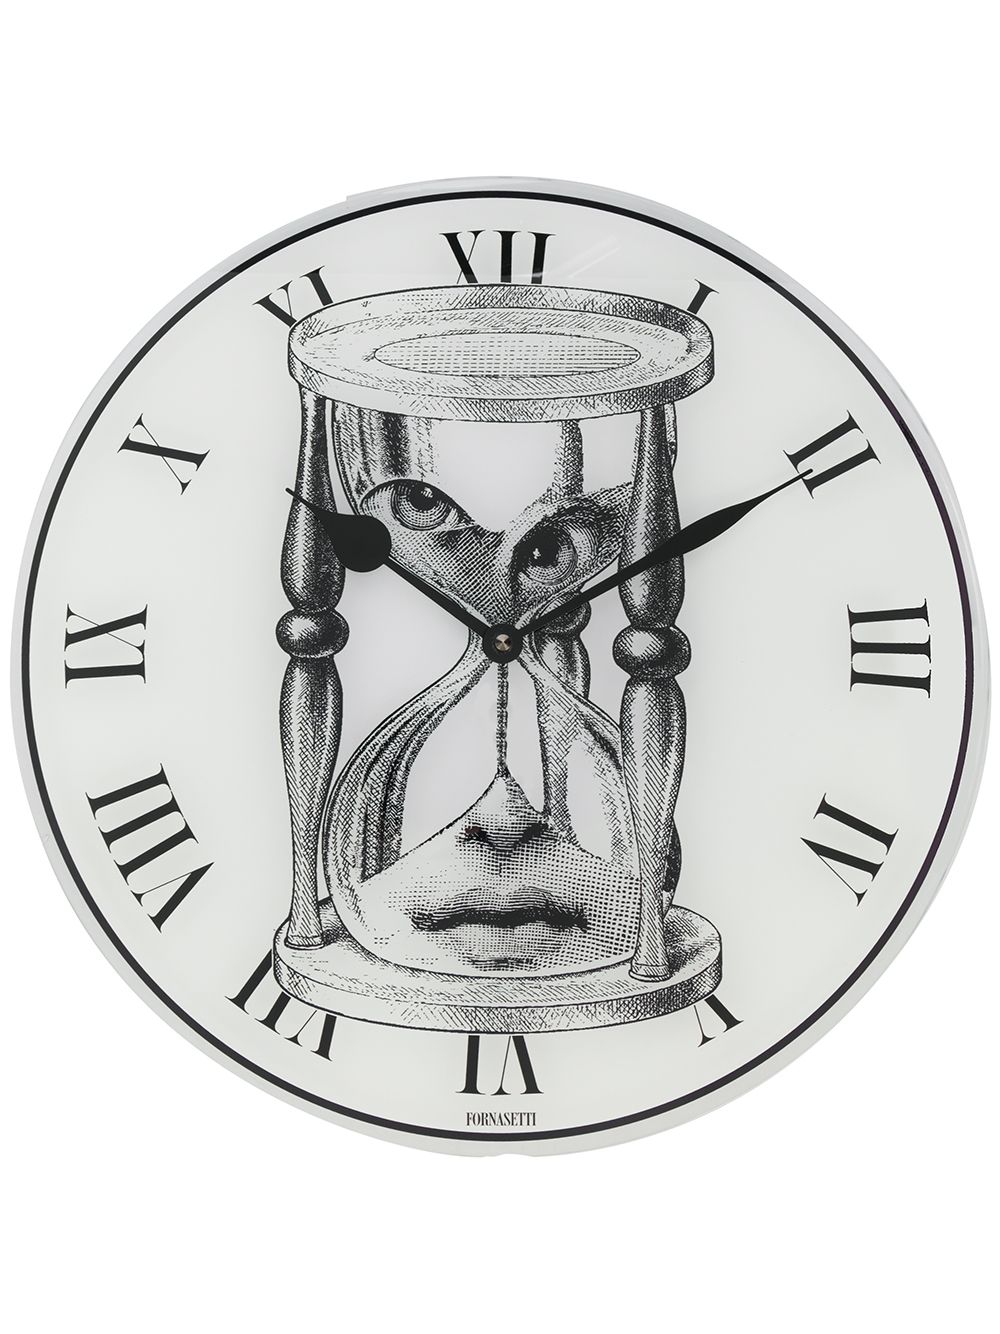 Fornasetti timer-face round wall clock - White von Fornasetti